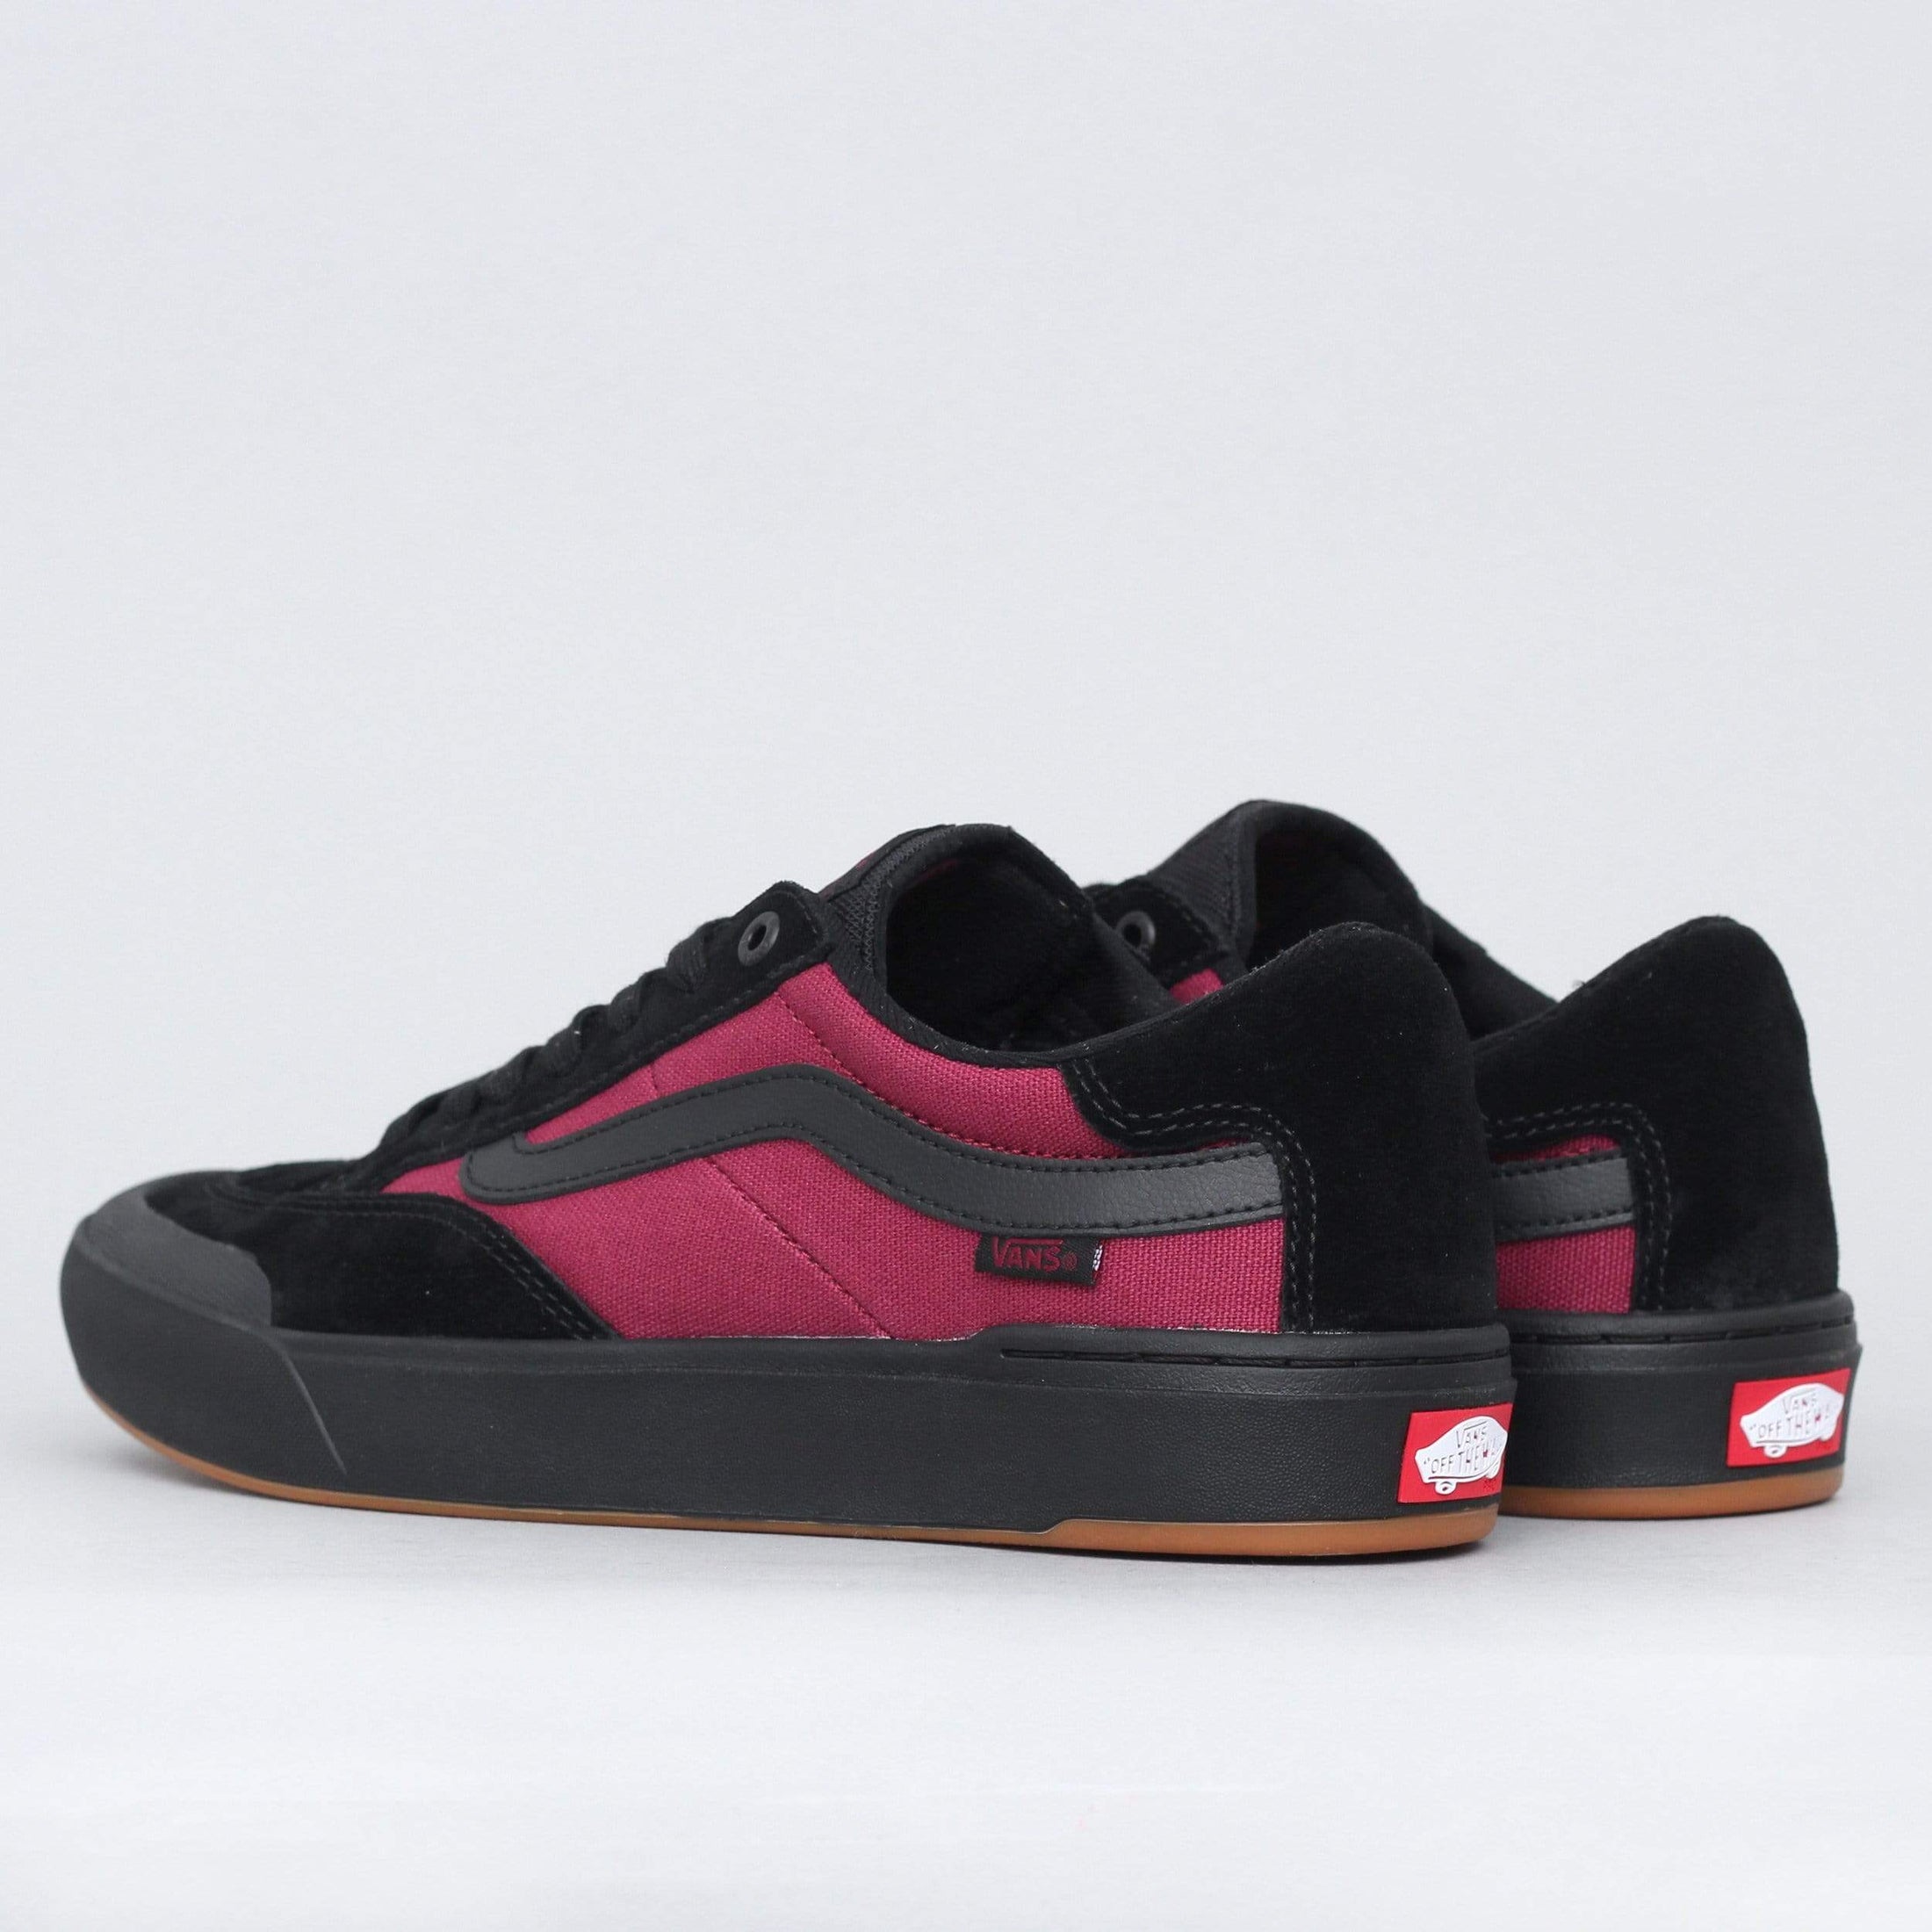 Vans Berle Pro Shoes (Punk) Black / Beet Red